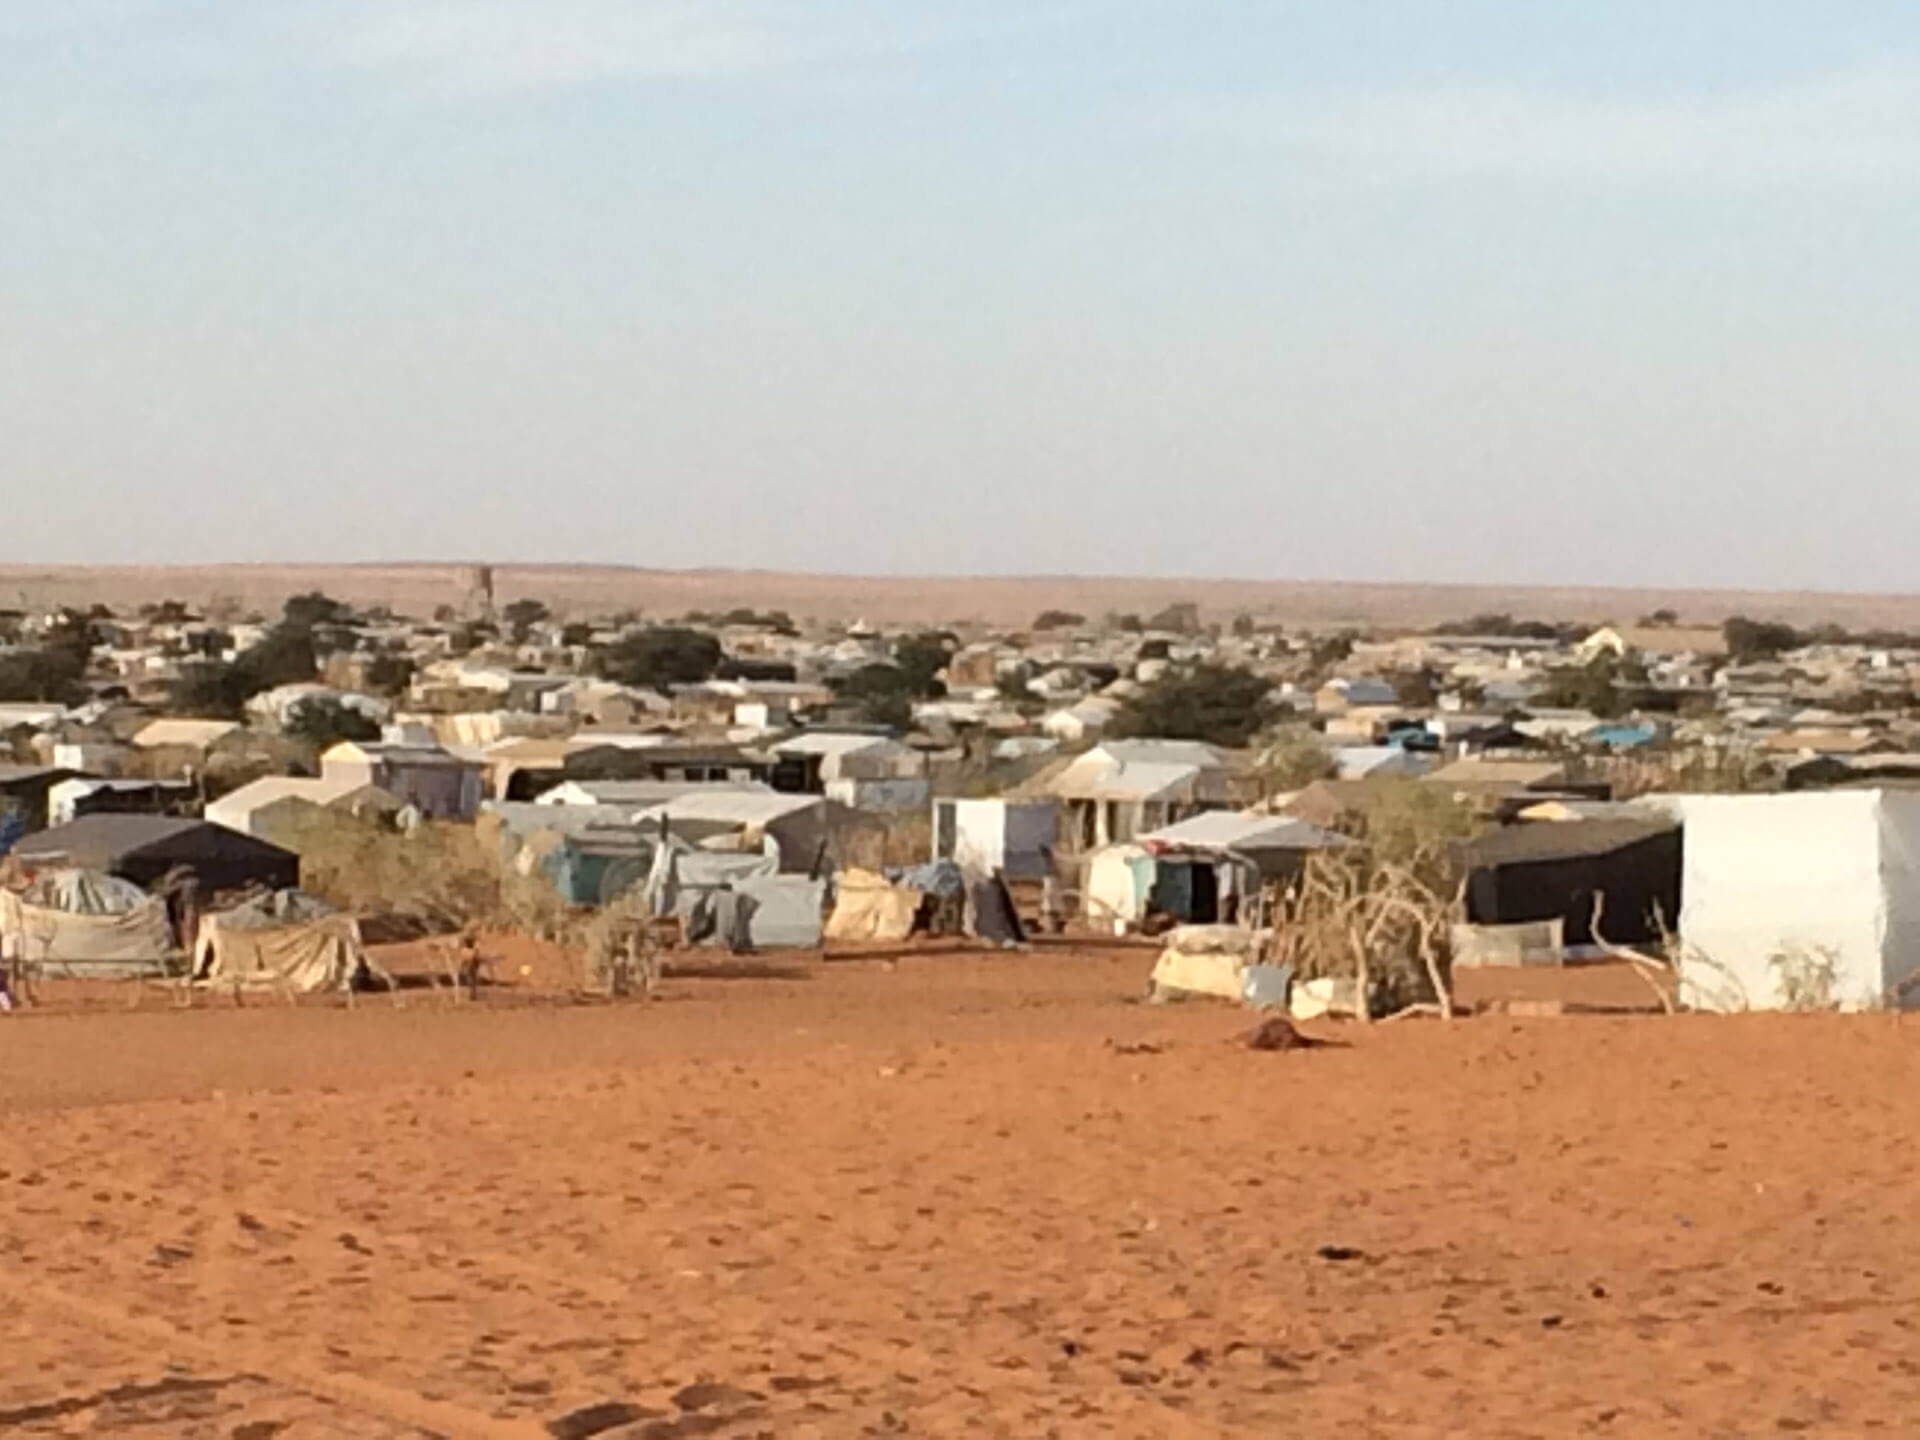 M’Bera camp in Bassikounou, Mauritania on the border with Mali